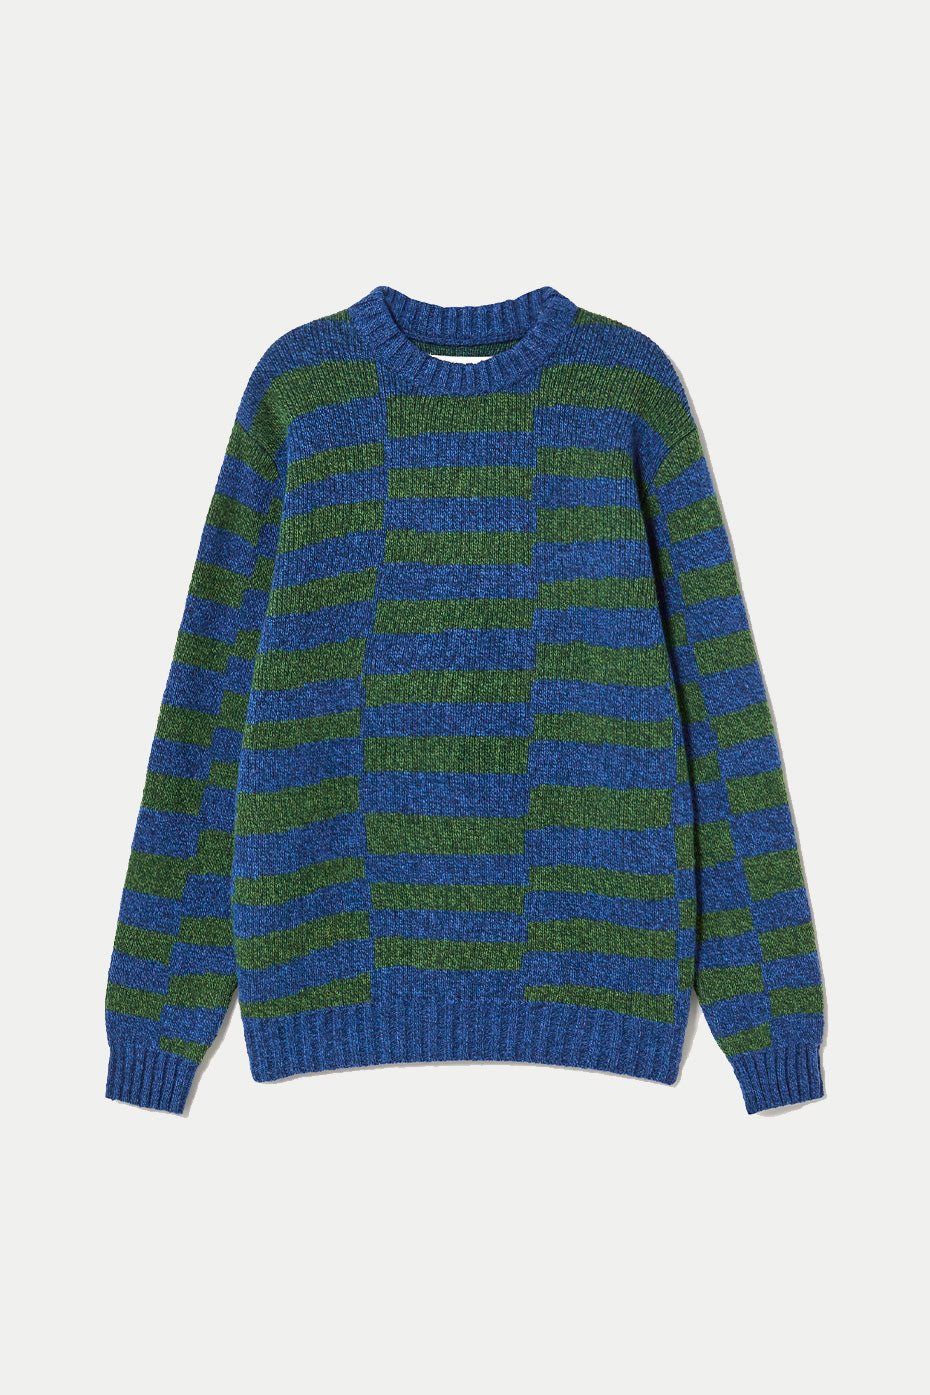 Tipsy Khem Knitted Sweater